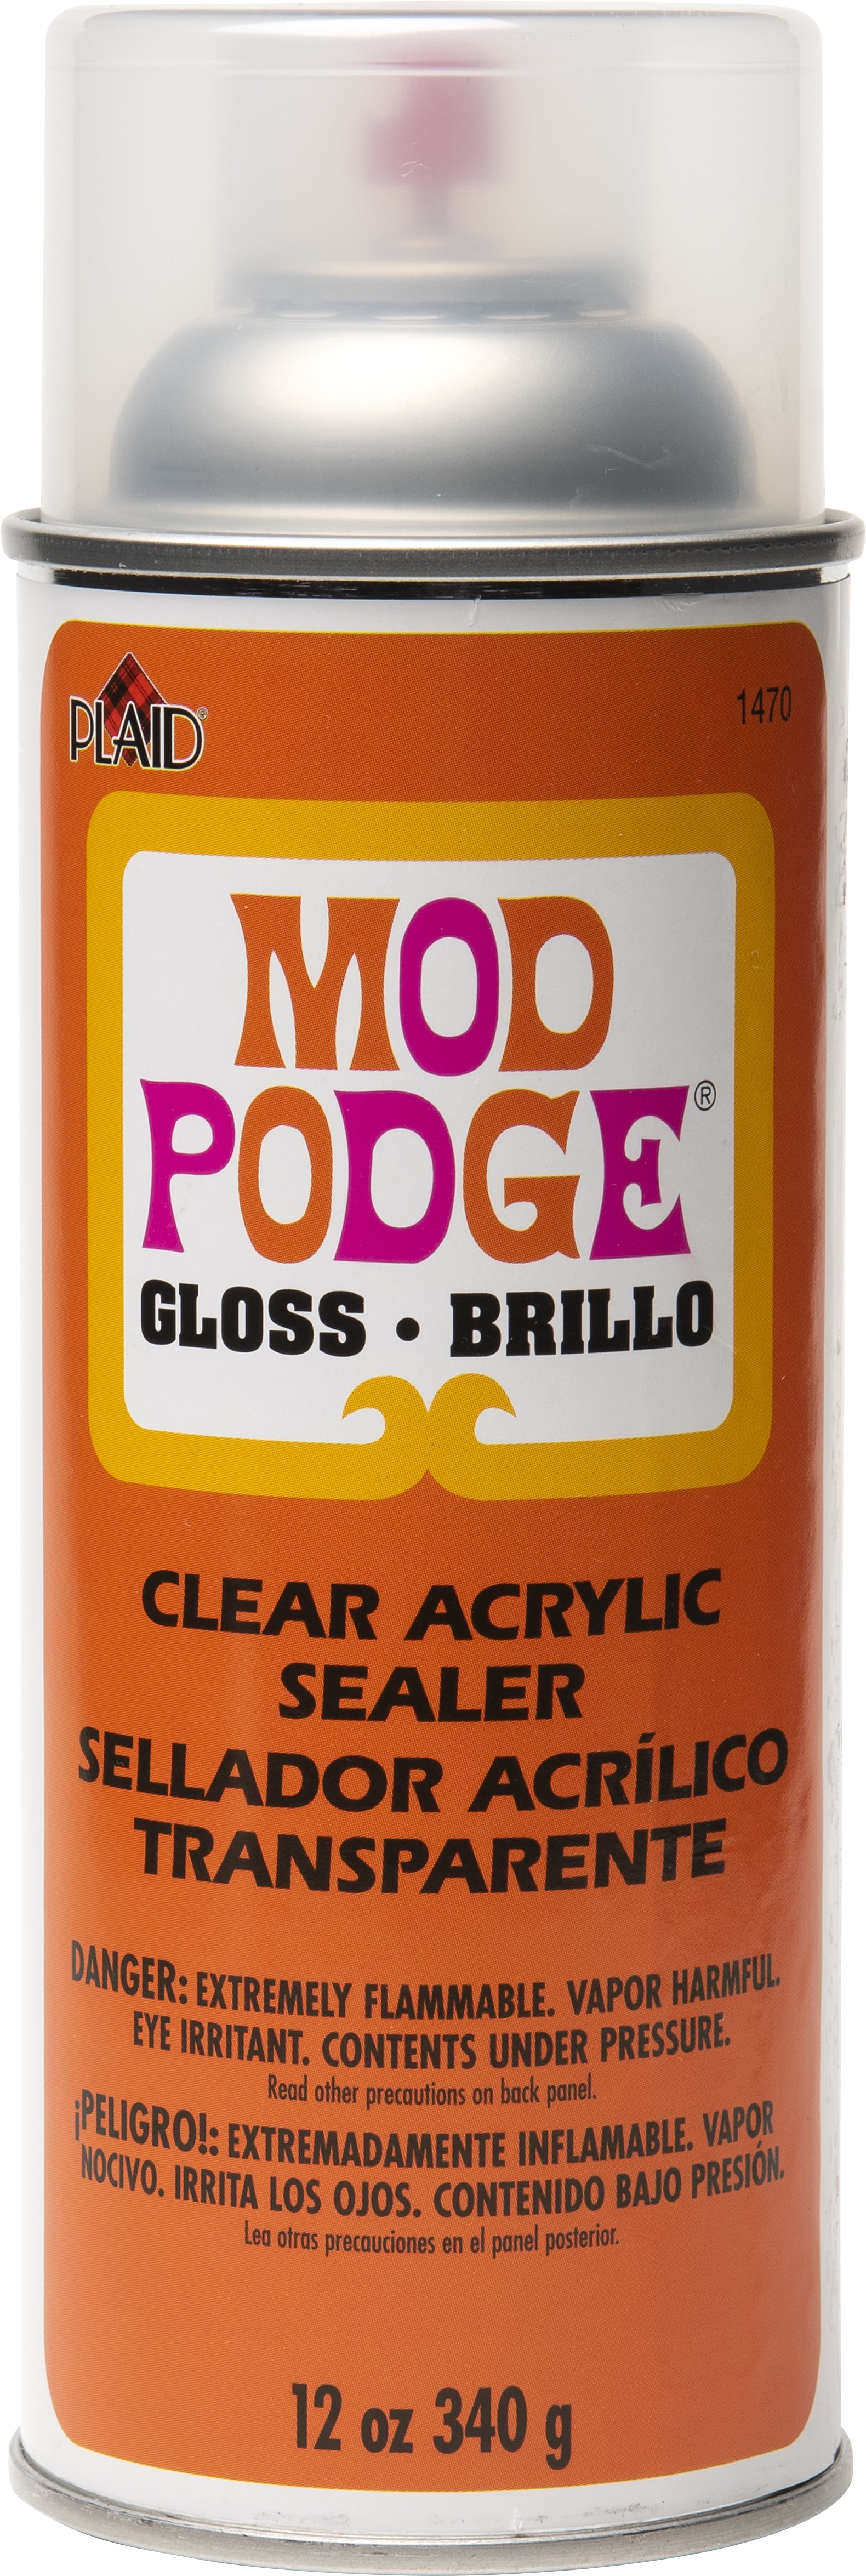 Mod Podge Clear Acrylic Sealer, 12 ounce, Matte – Pixiss